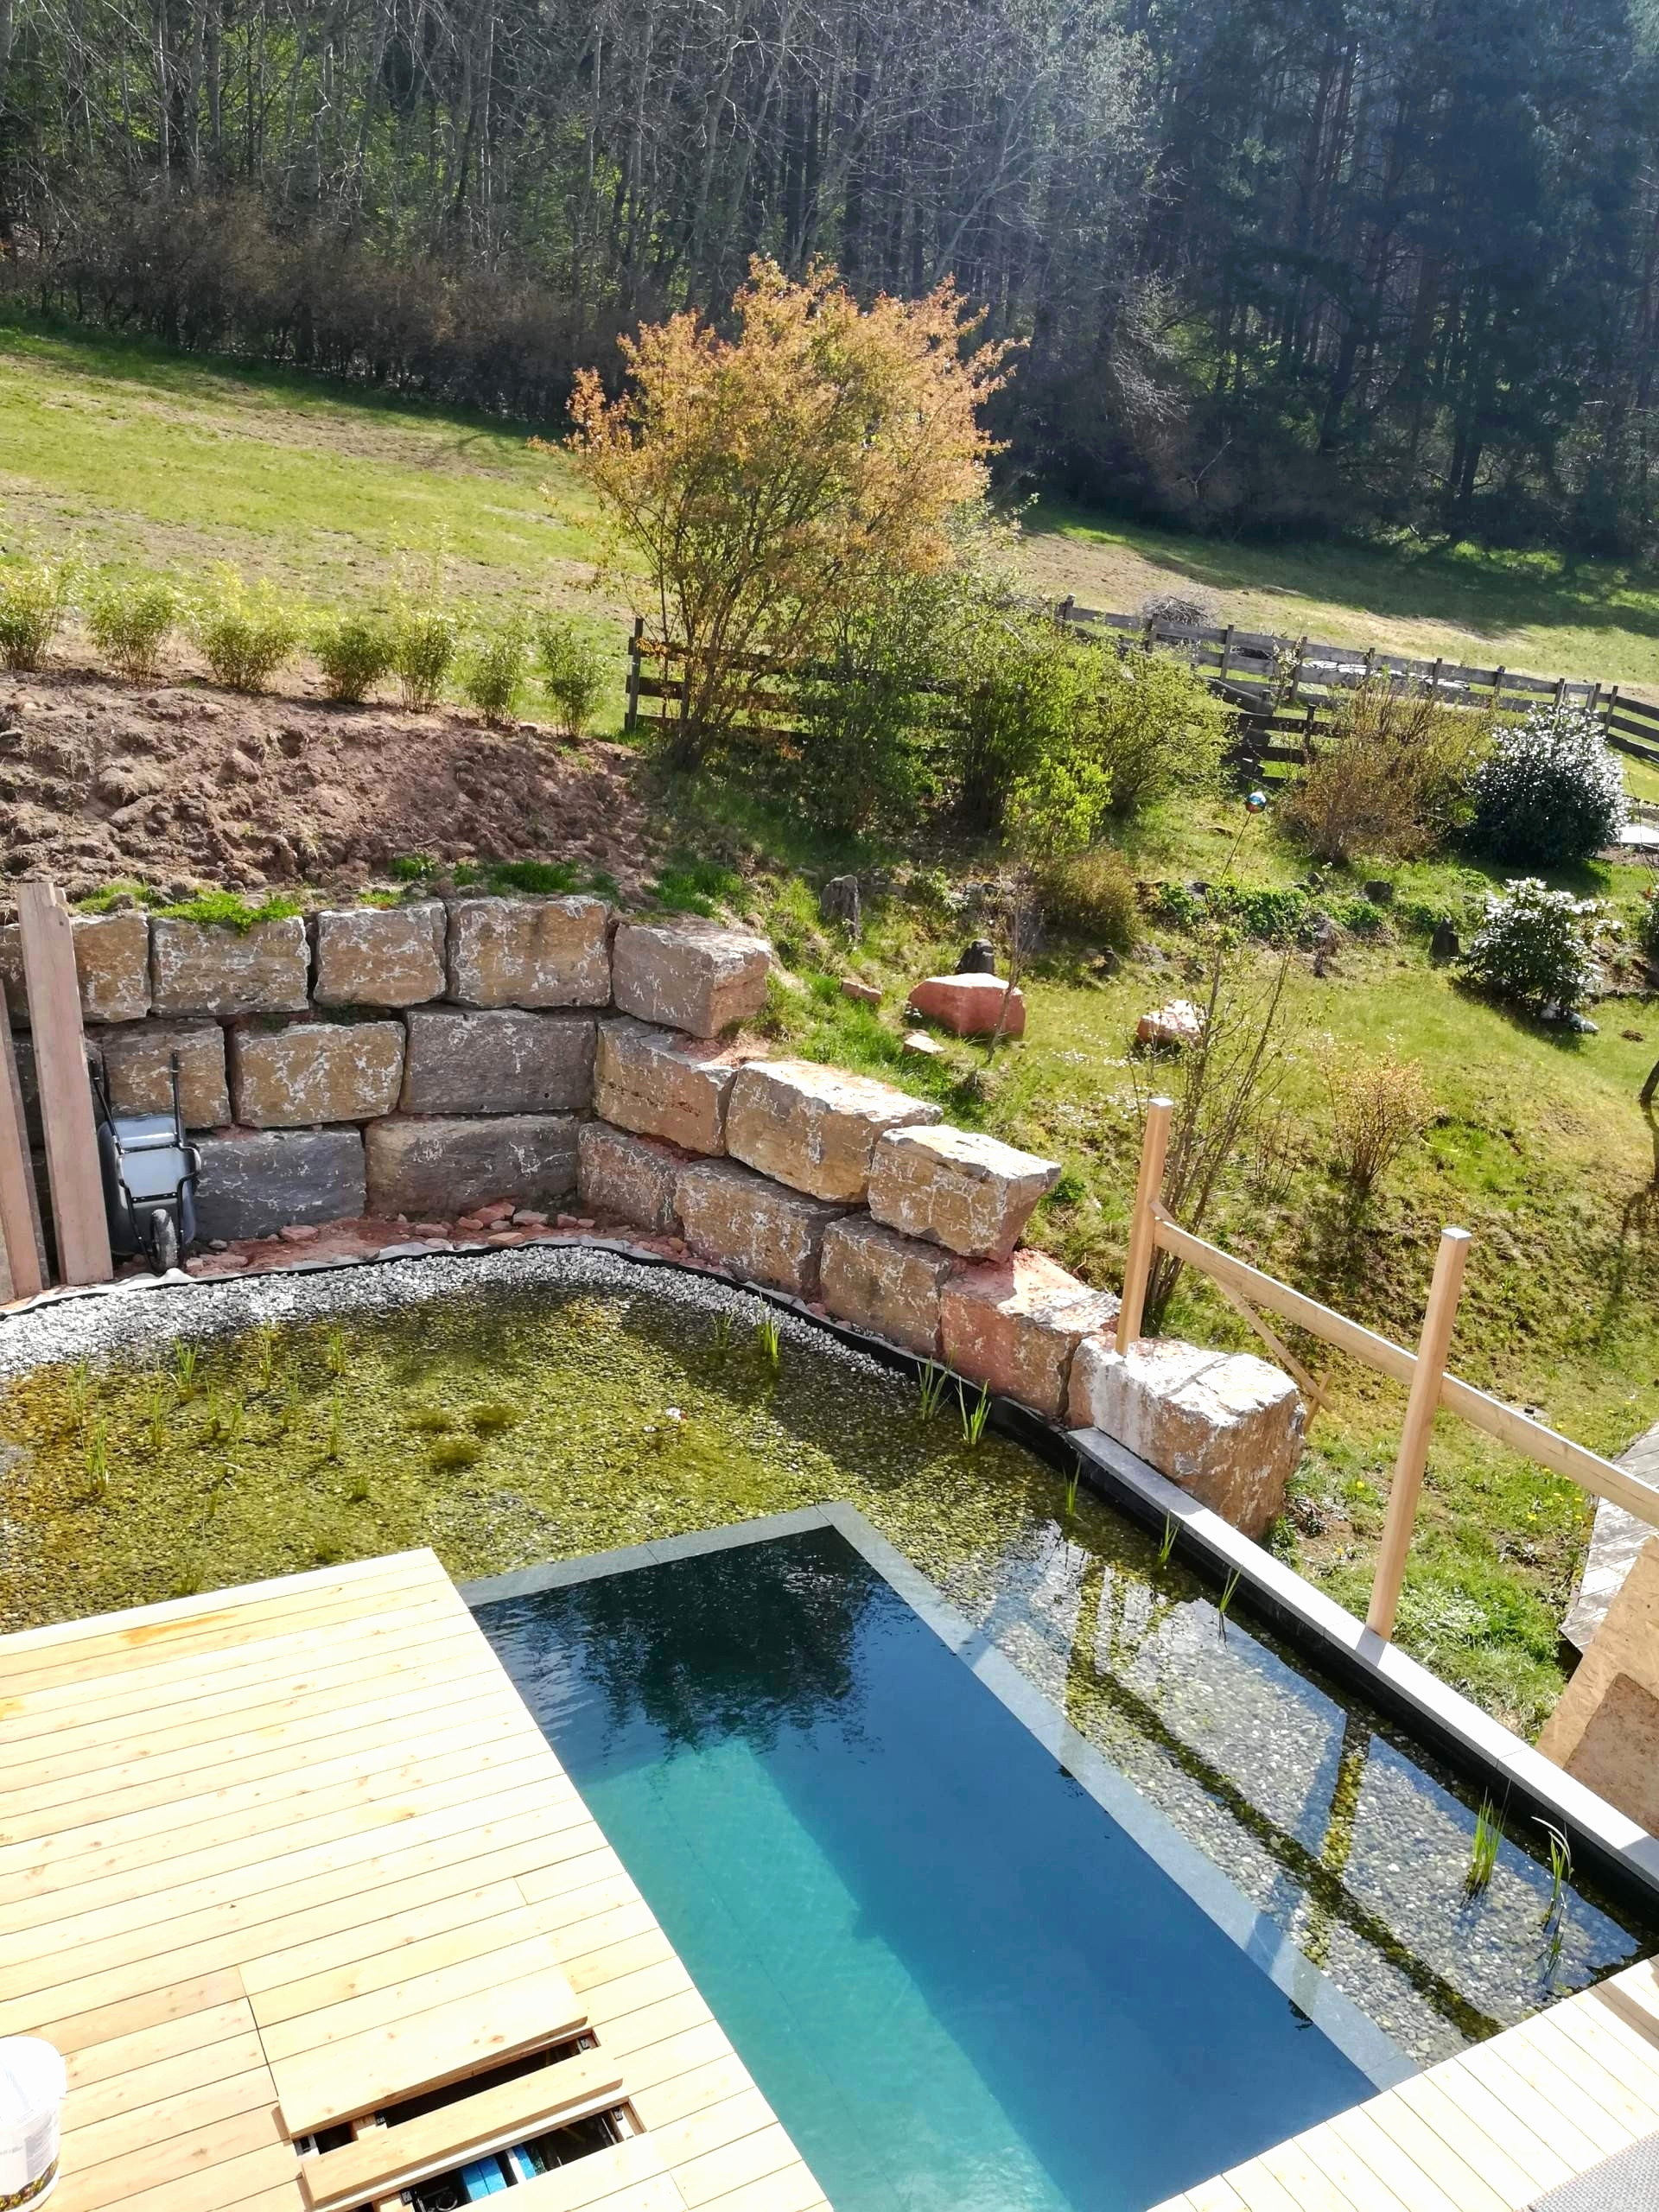 terrasse jardin pas cher elegant piscine bois pas cher genial barriere en bois de jardin de joli od of terrasse jardin pas cher